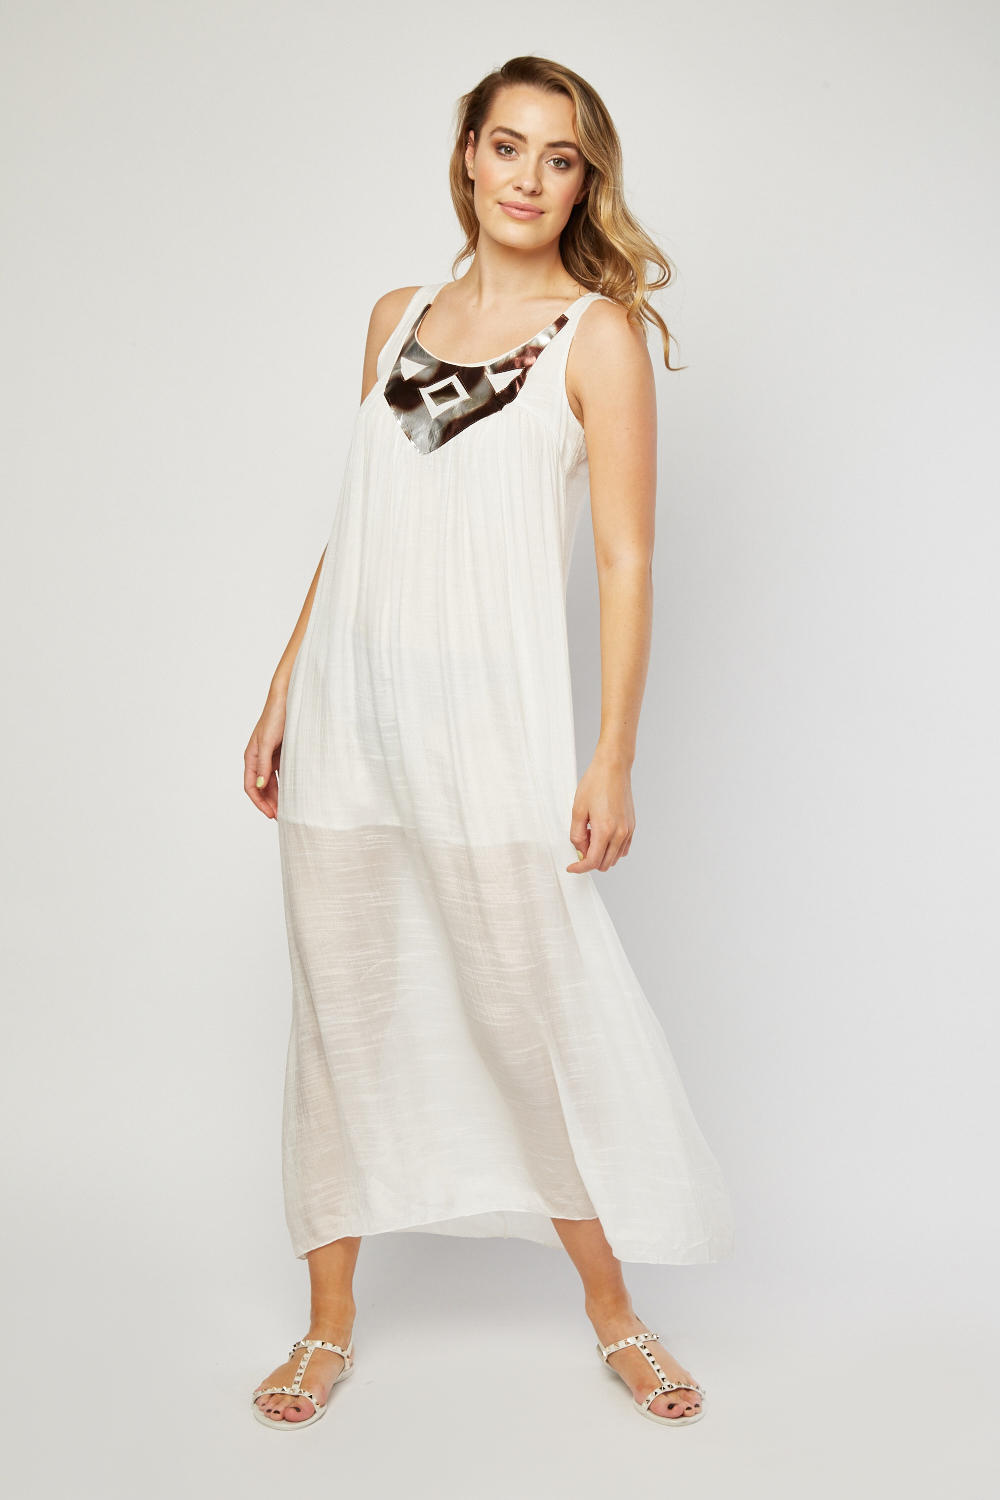 Sheer Grecian Style Maxi Dress - Just $3